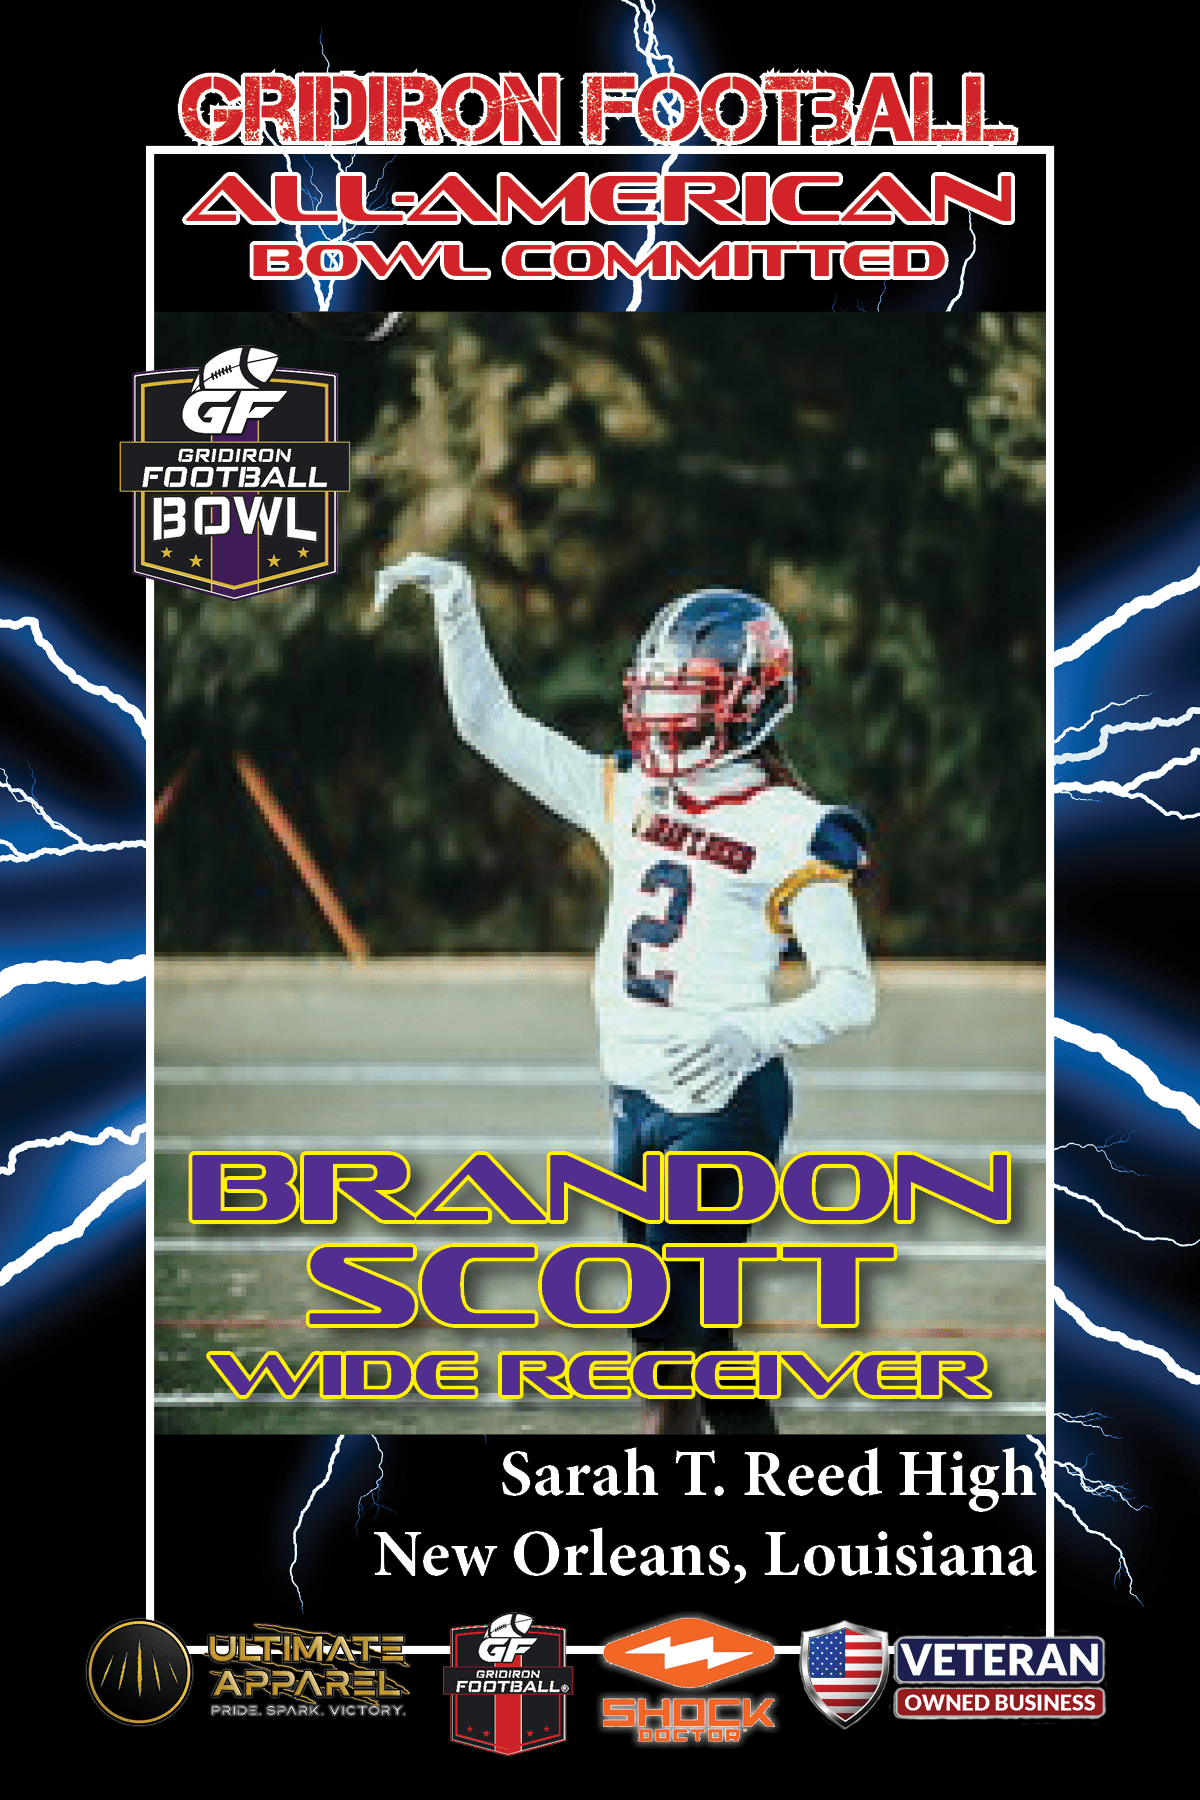 BREAKING NEWS: Sarah T. Reed High School (New Orleans, La.) WR Brandon Scott commits to Gridiron Football All-American Bowl